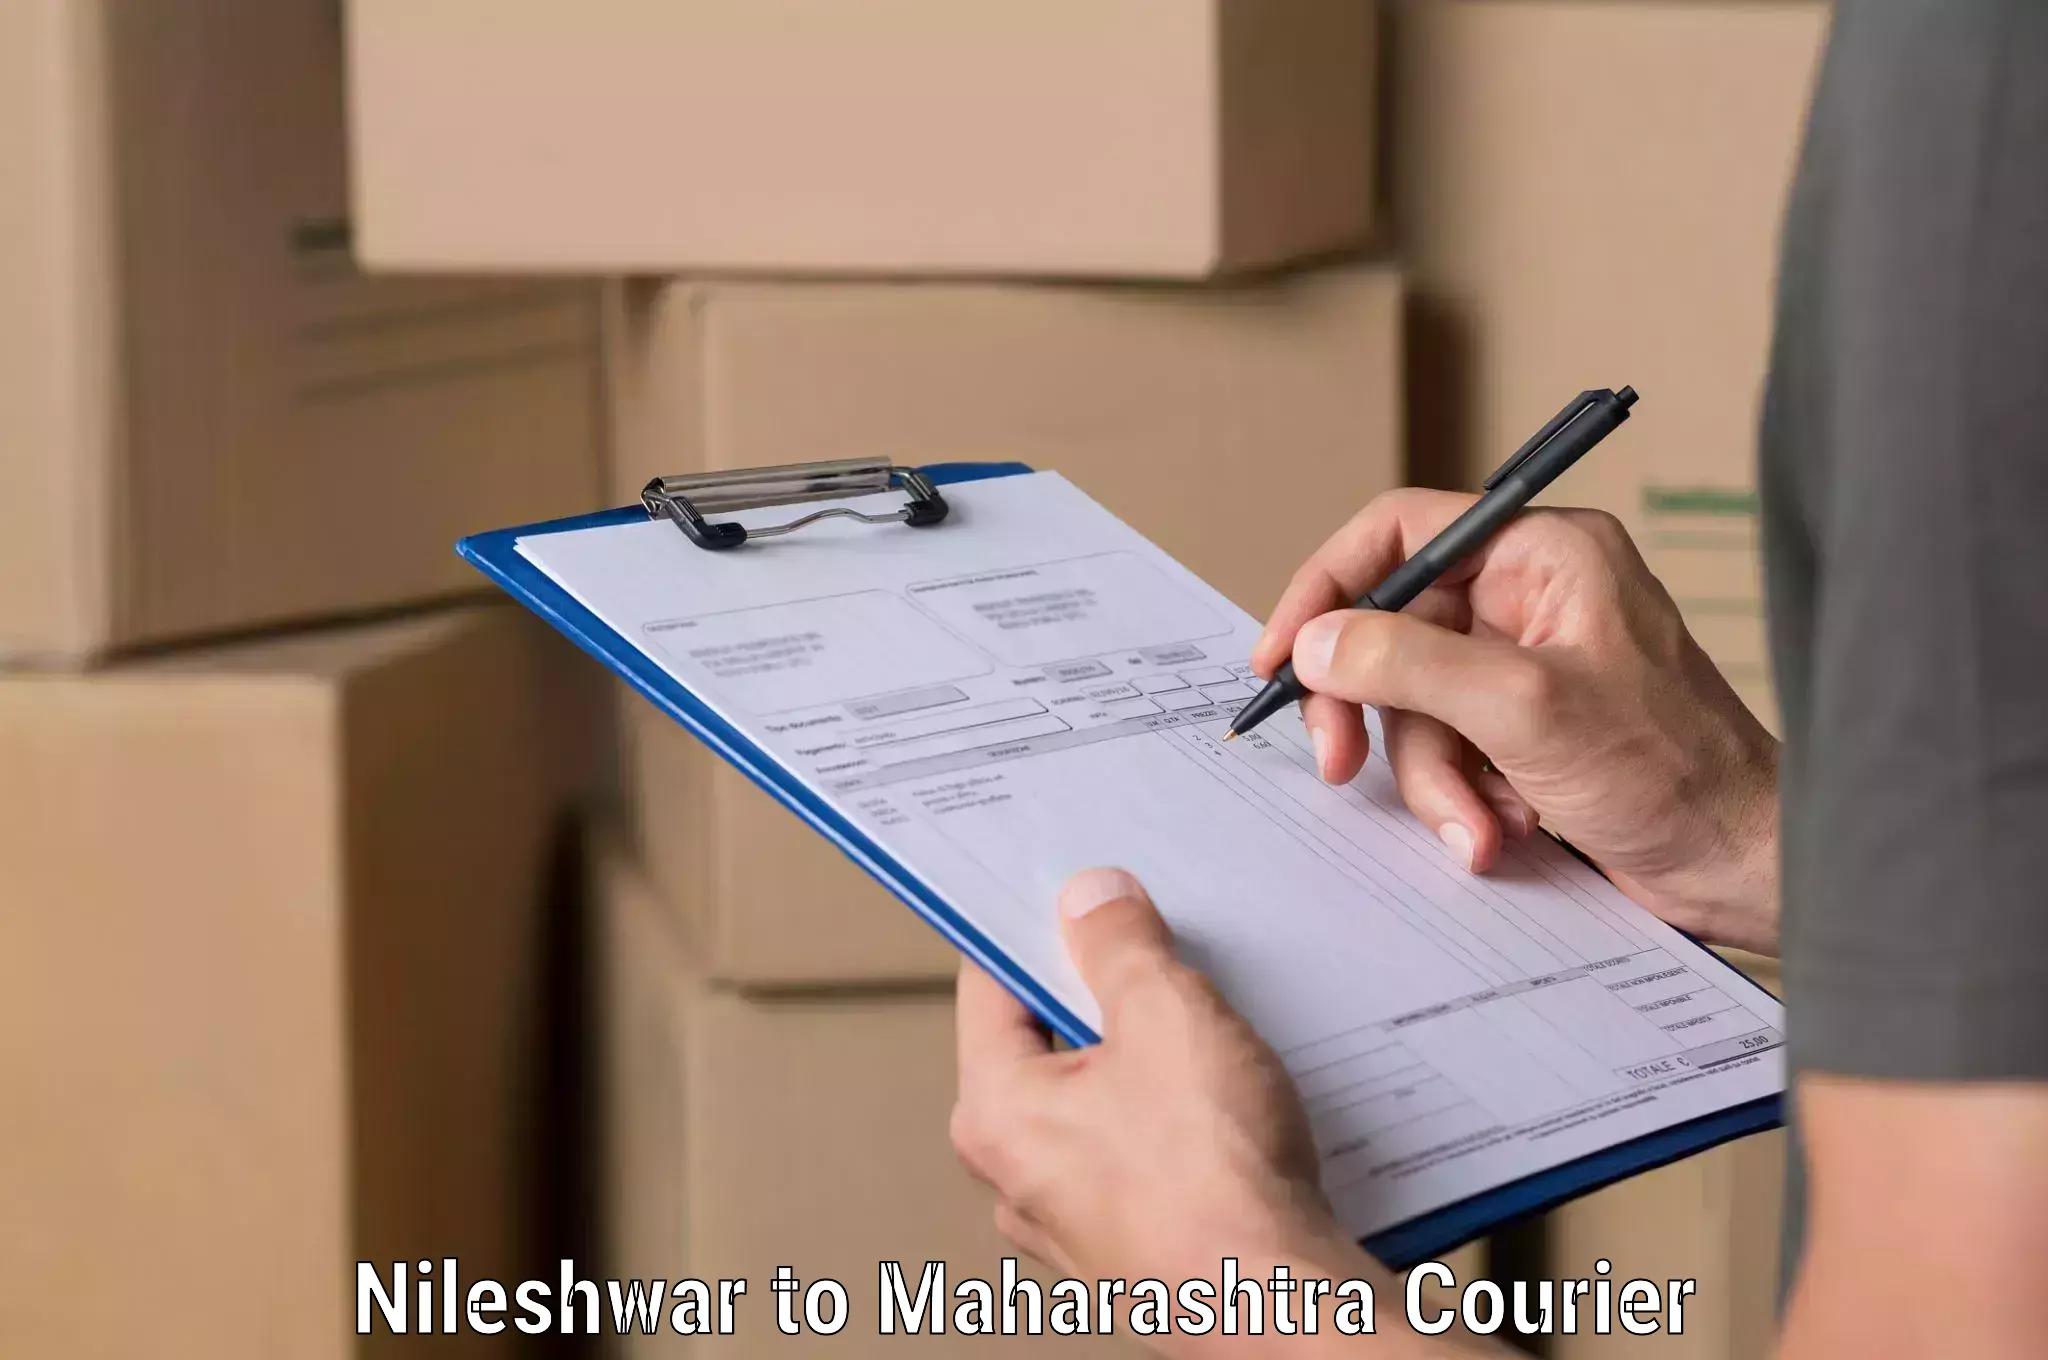 Modern delivery methods in Nileshwar to Worli